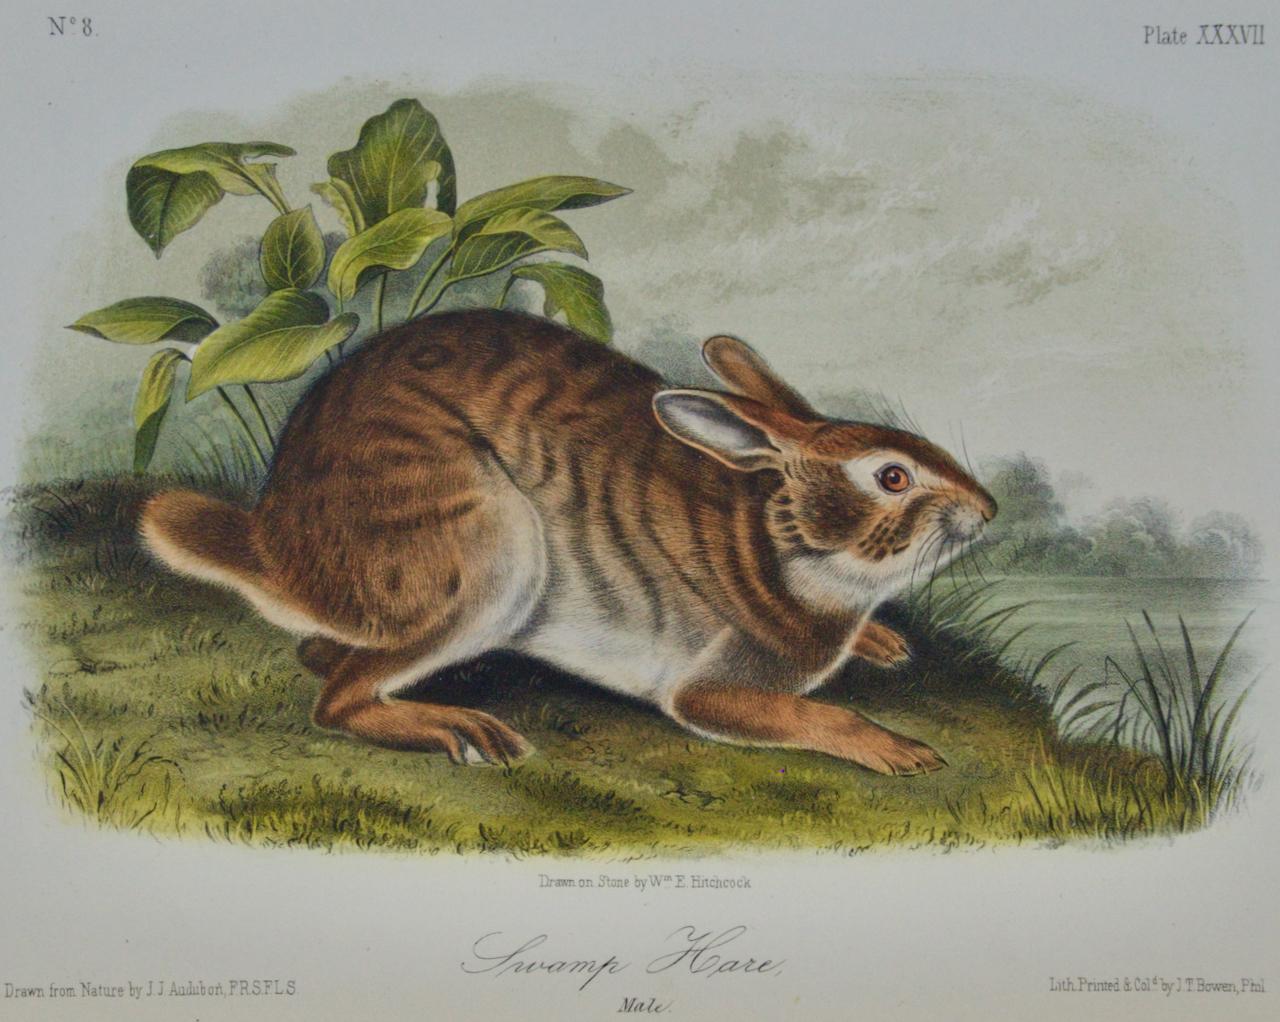 Swamp Hare: an Original 19th Century Audubon Hand-colored Lithograph - Print by John James Audubon